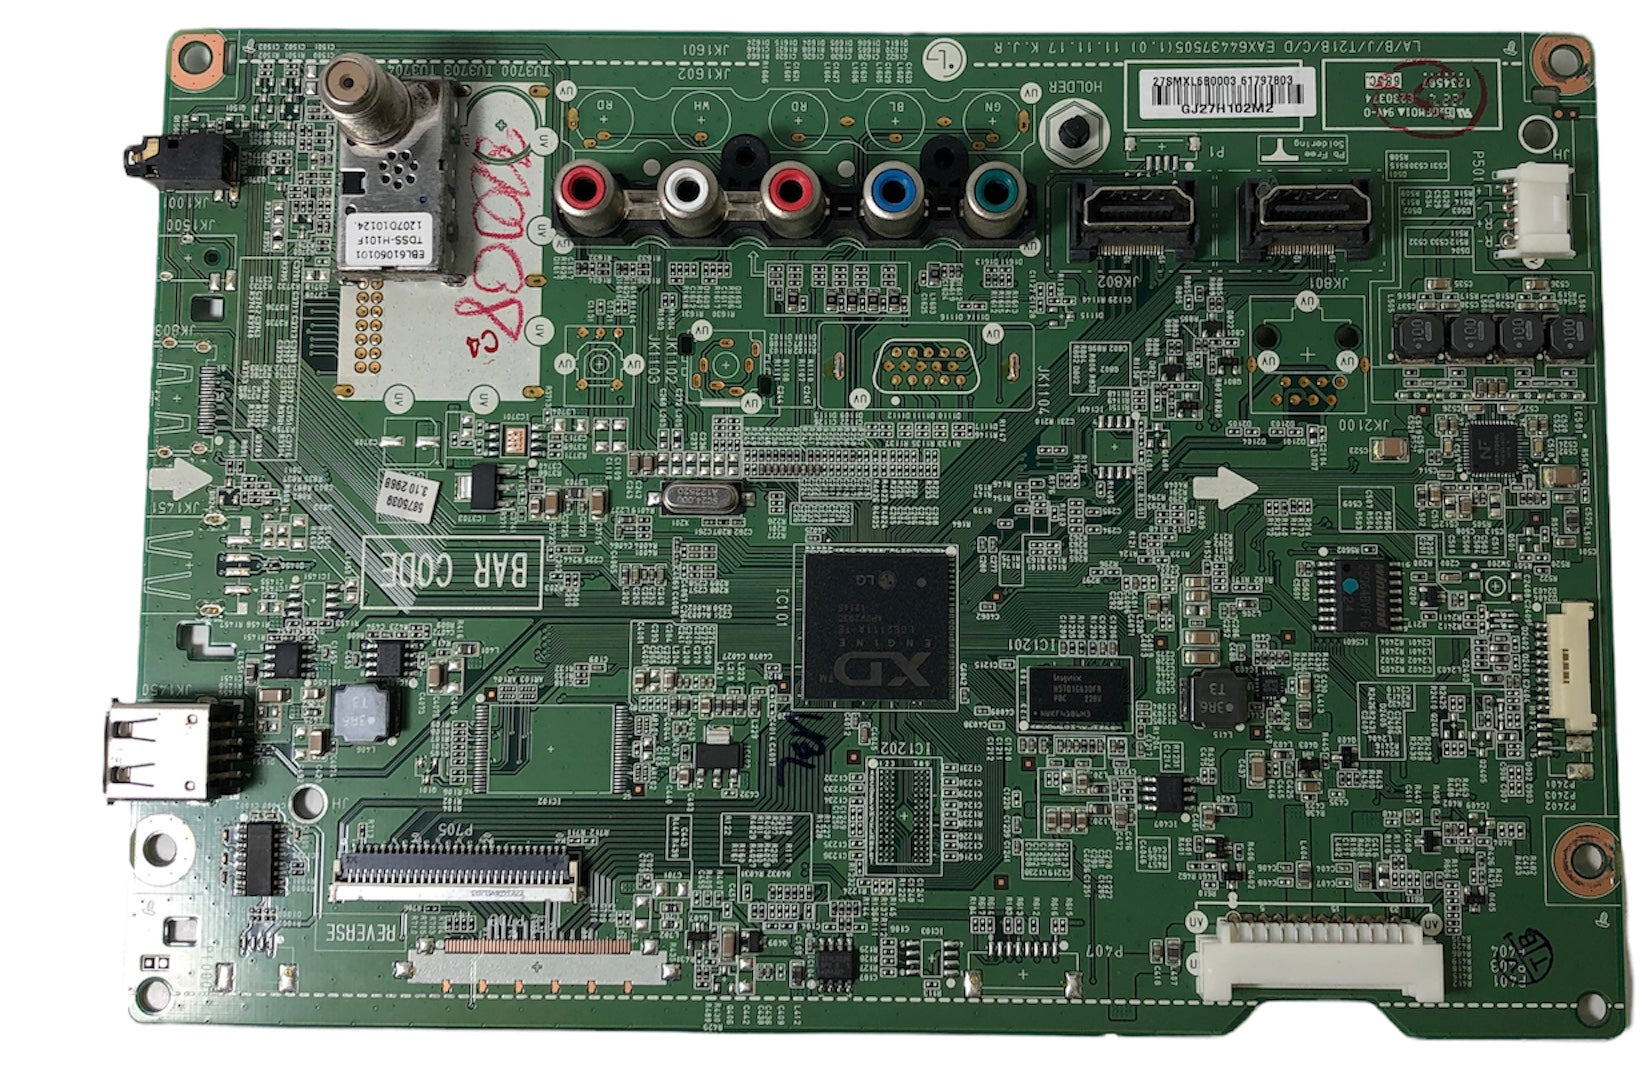 LG EBR61797803 (EAX64437505(1.0)) Main Board for 32LS3410-UB